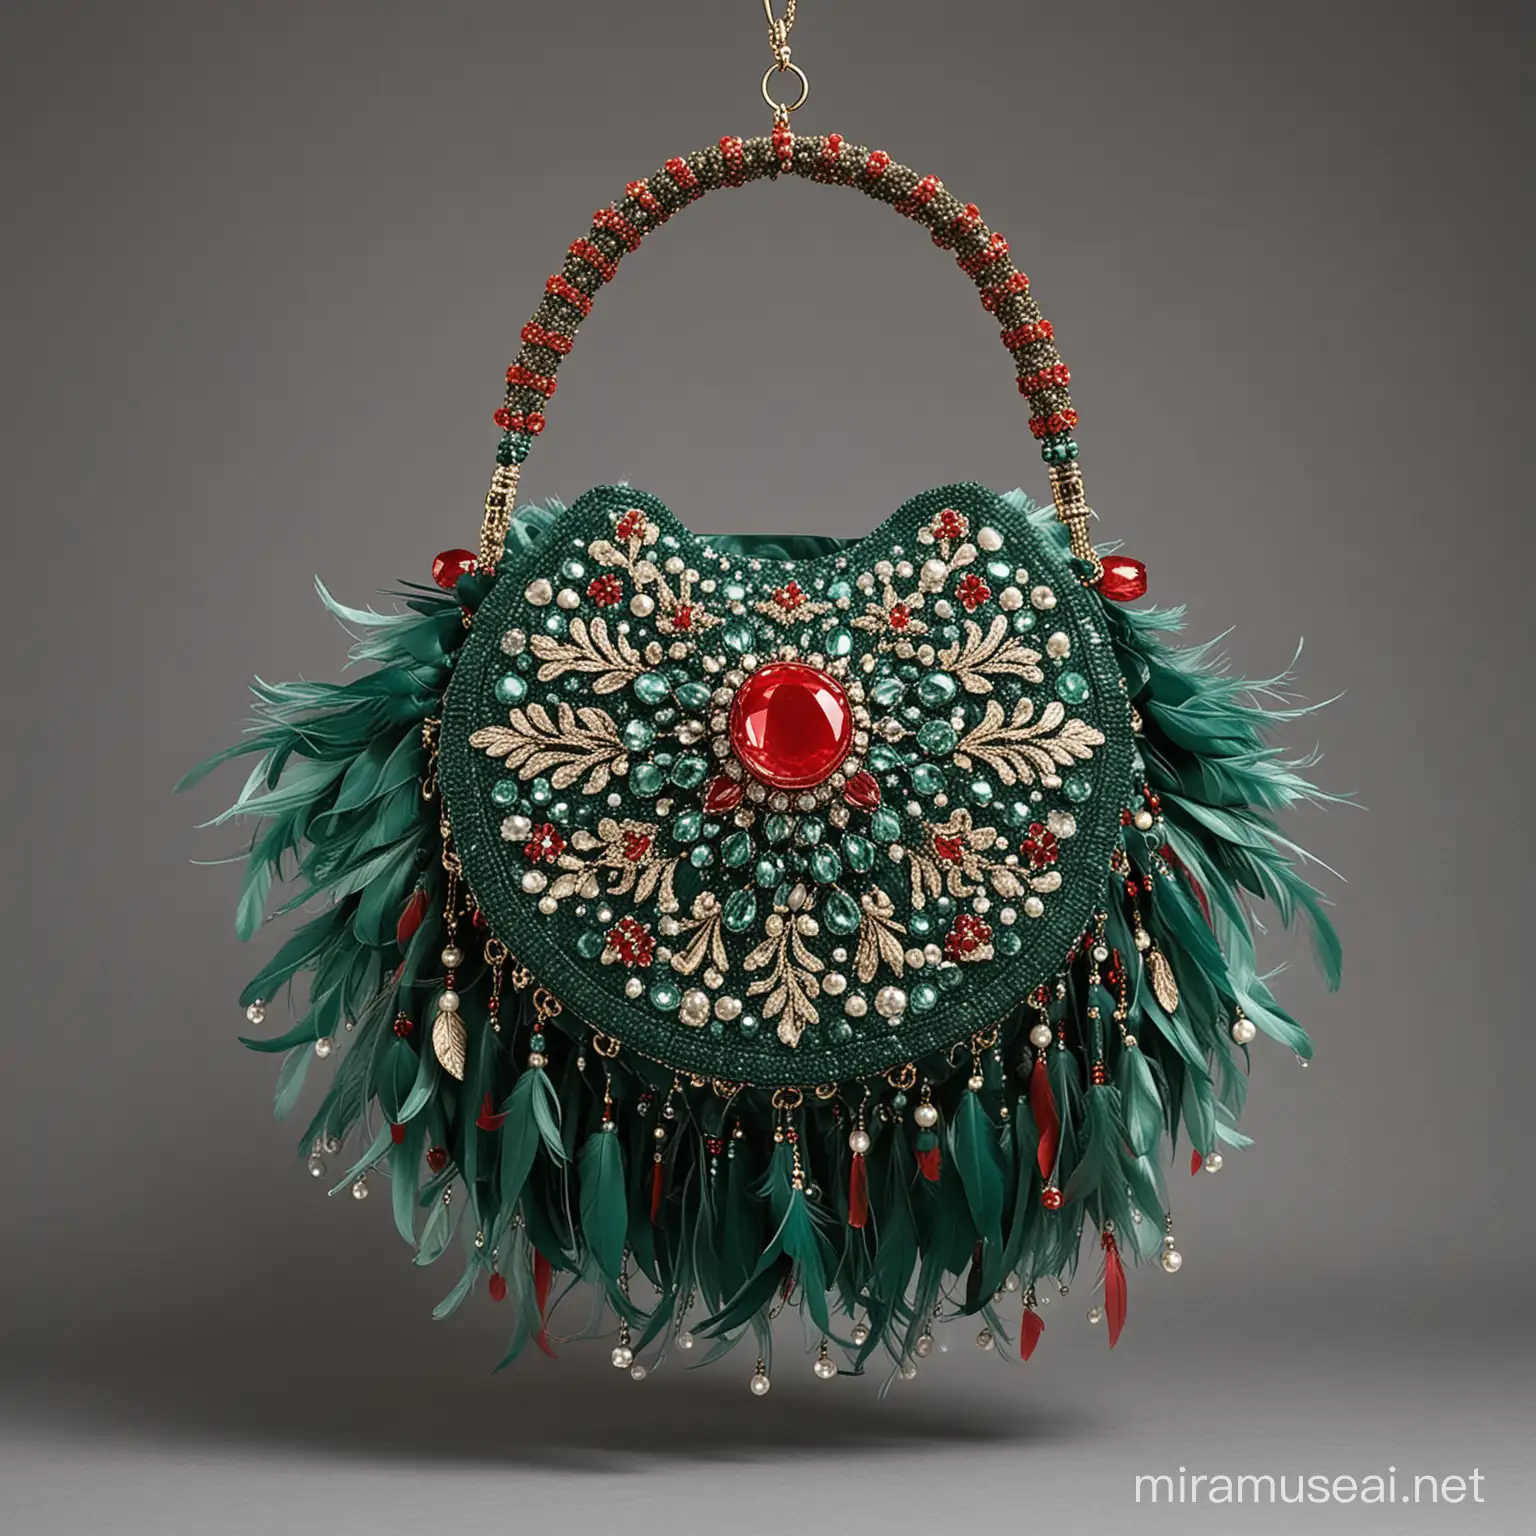 Luxurious Circular Handbag with Green Water Diamonds Pearls and Phoenix Feathers